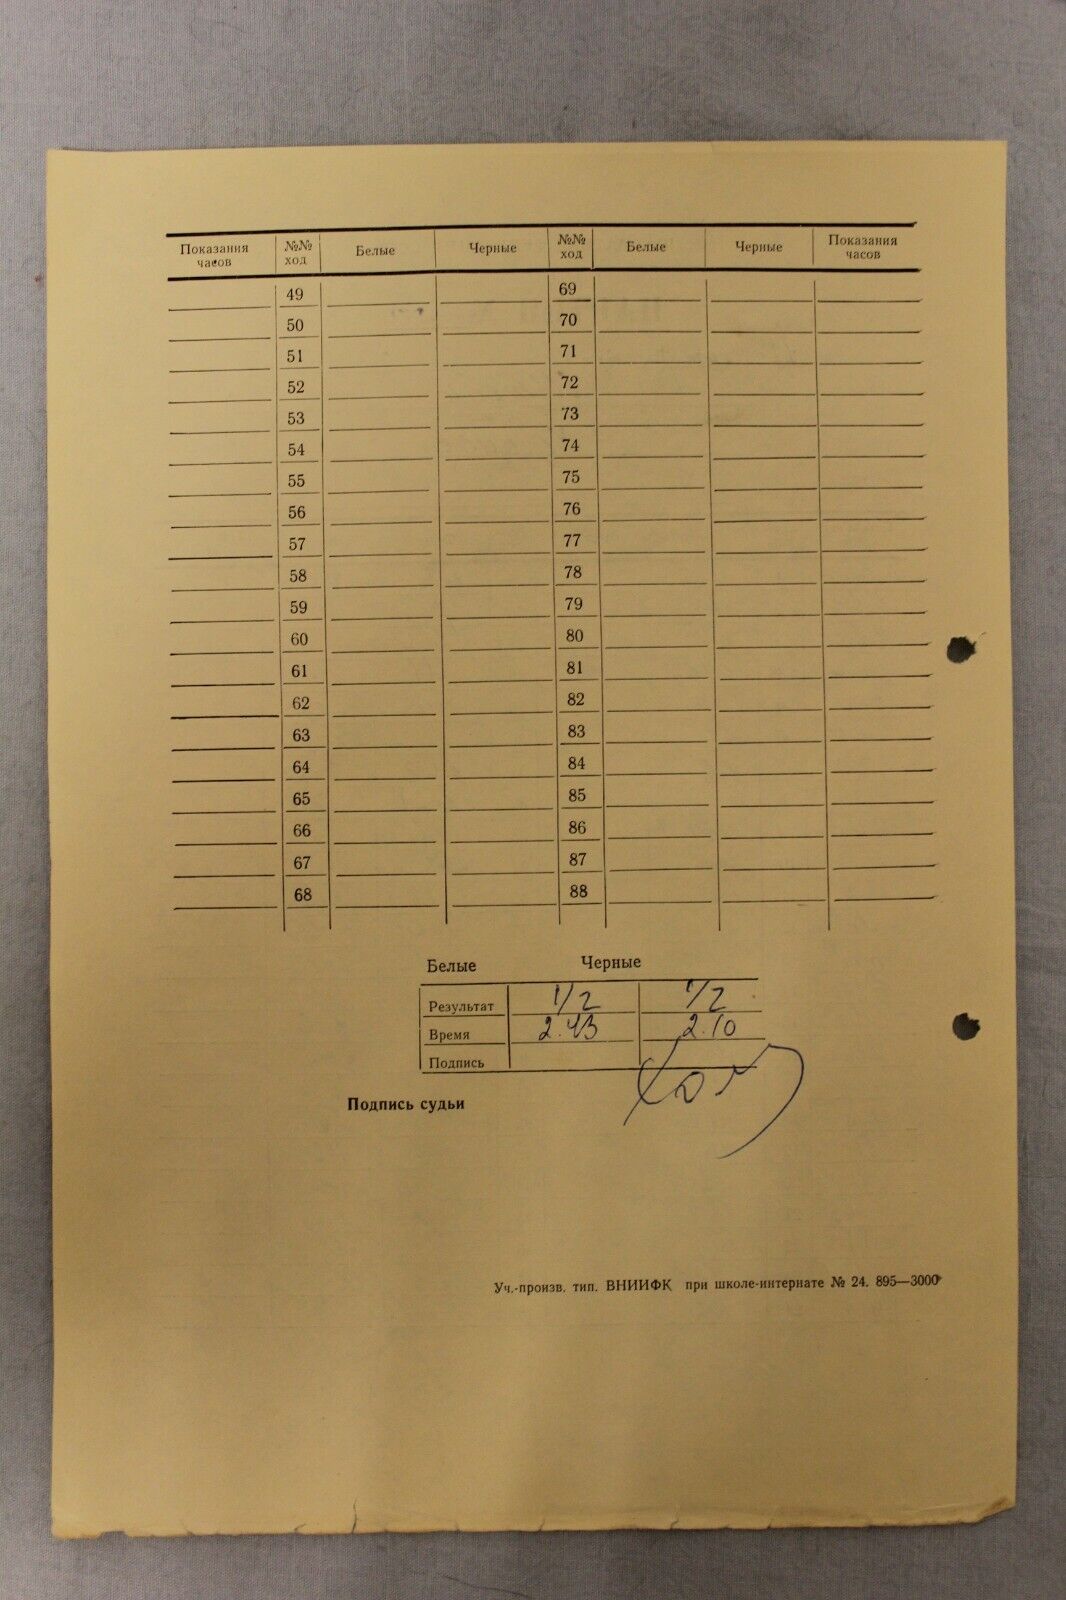 11867.Soviet Score Sheet. Stein-Holmov. 37th USSR Chess Championship. 1969